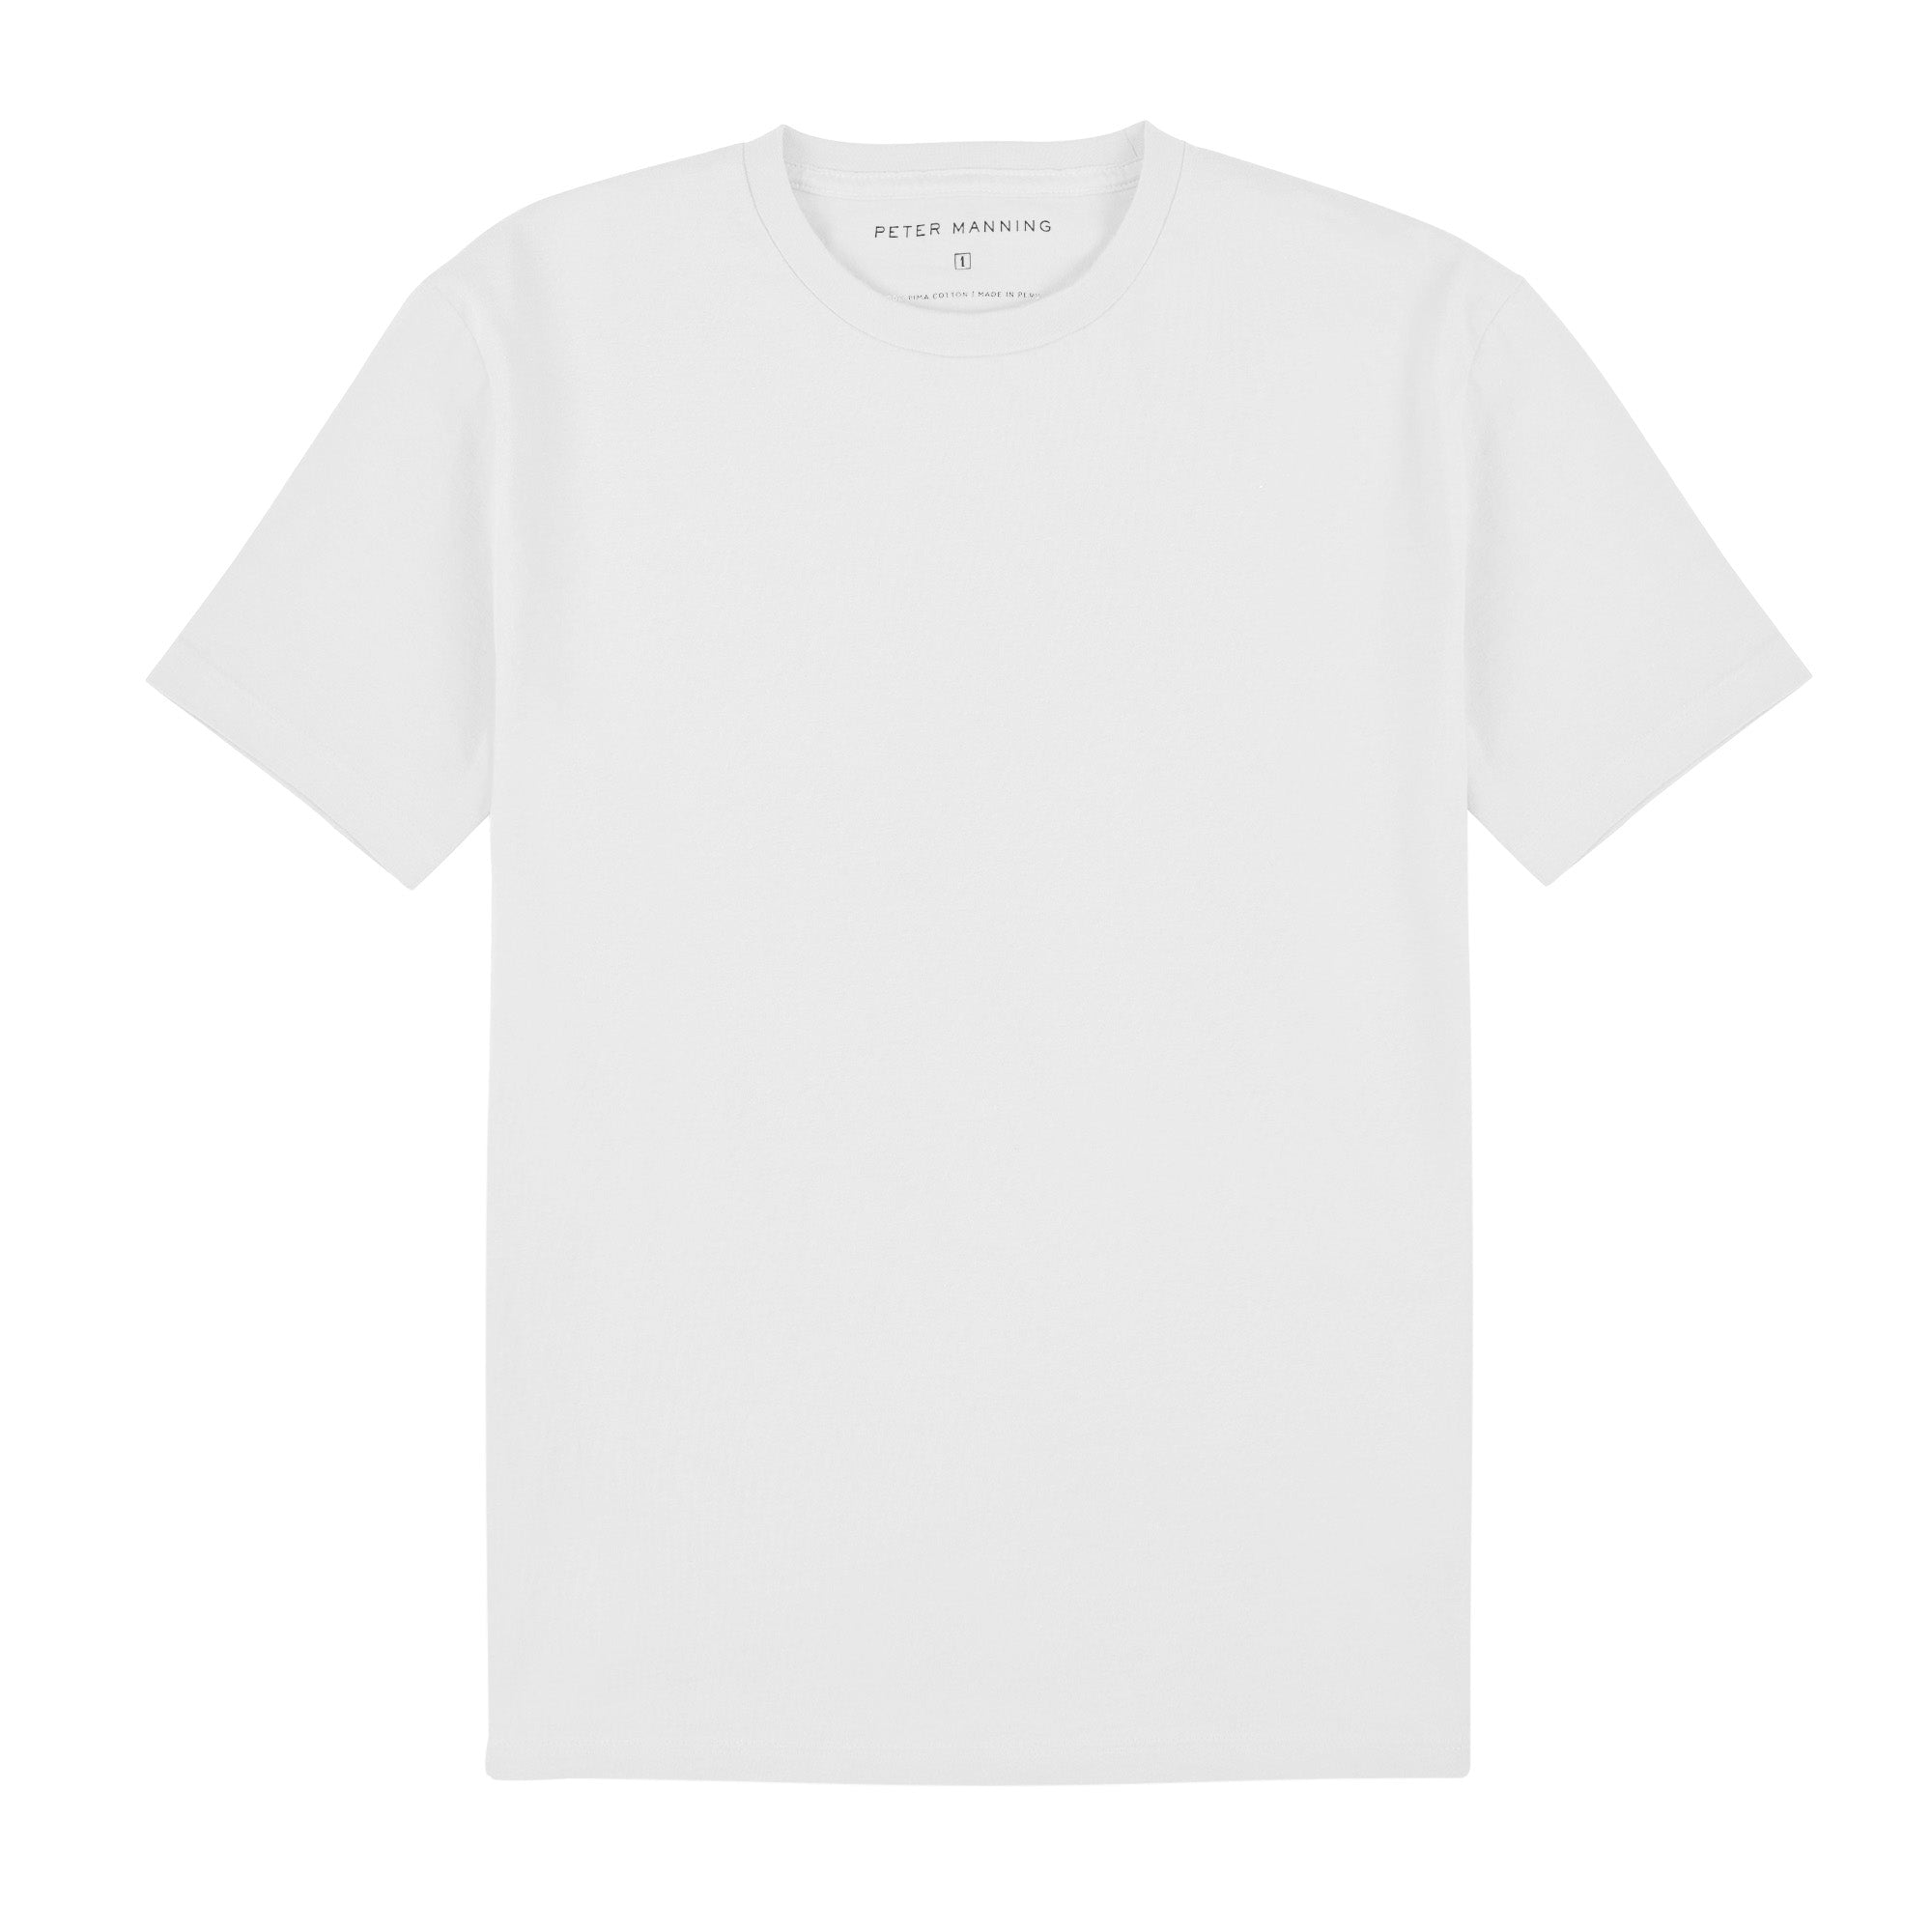 Vintage Crew T-Shirt, White NYC Manning Peter 